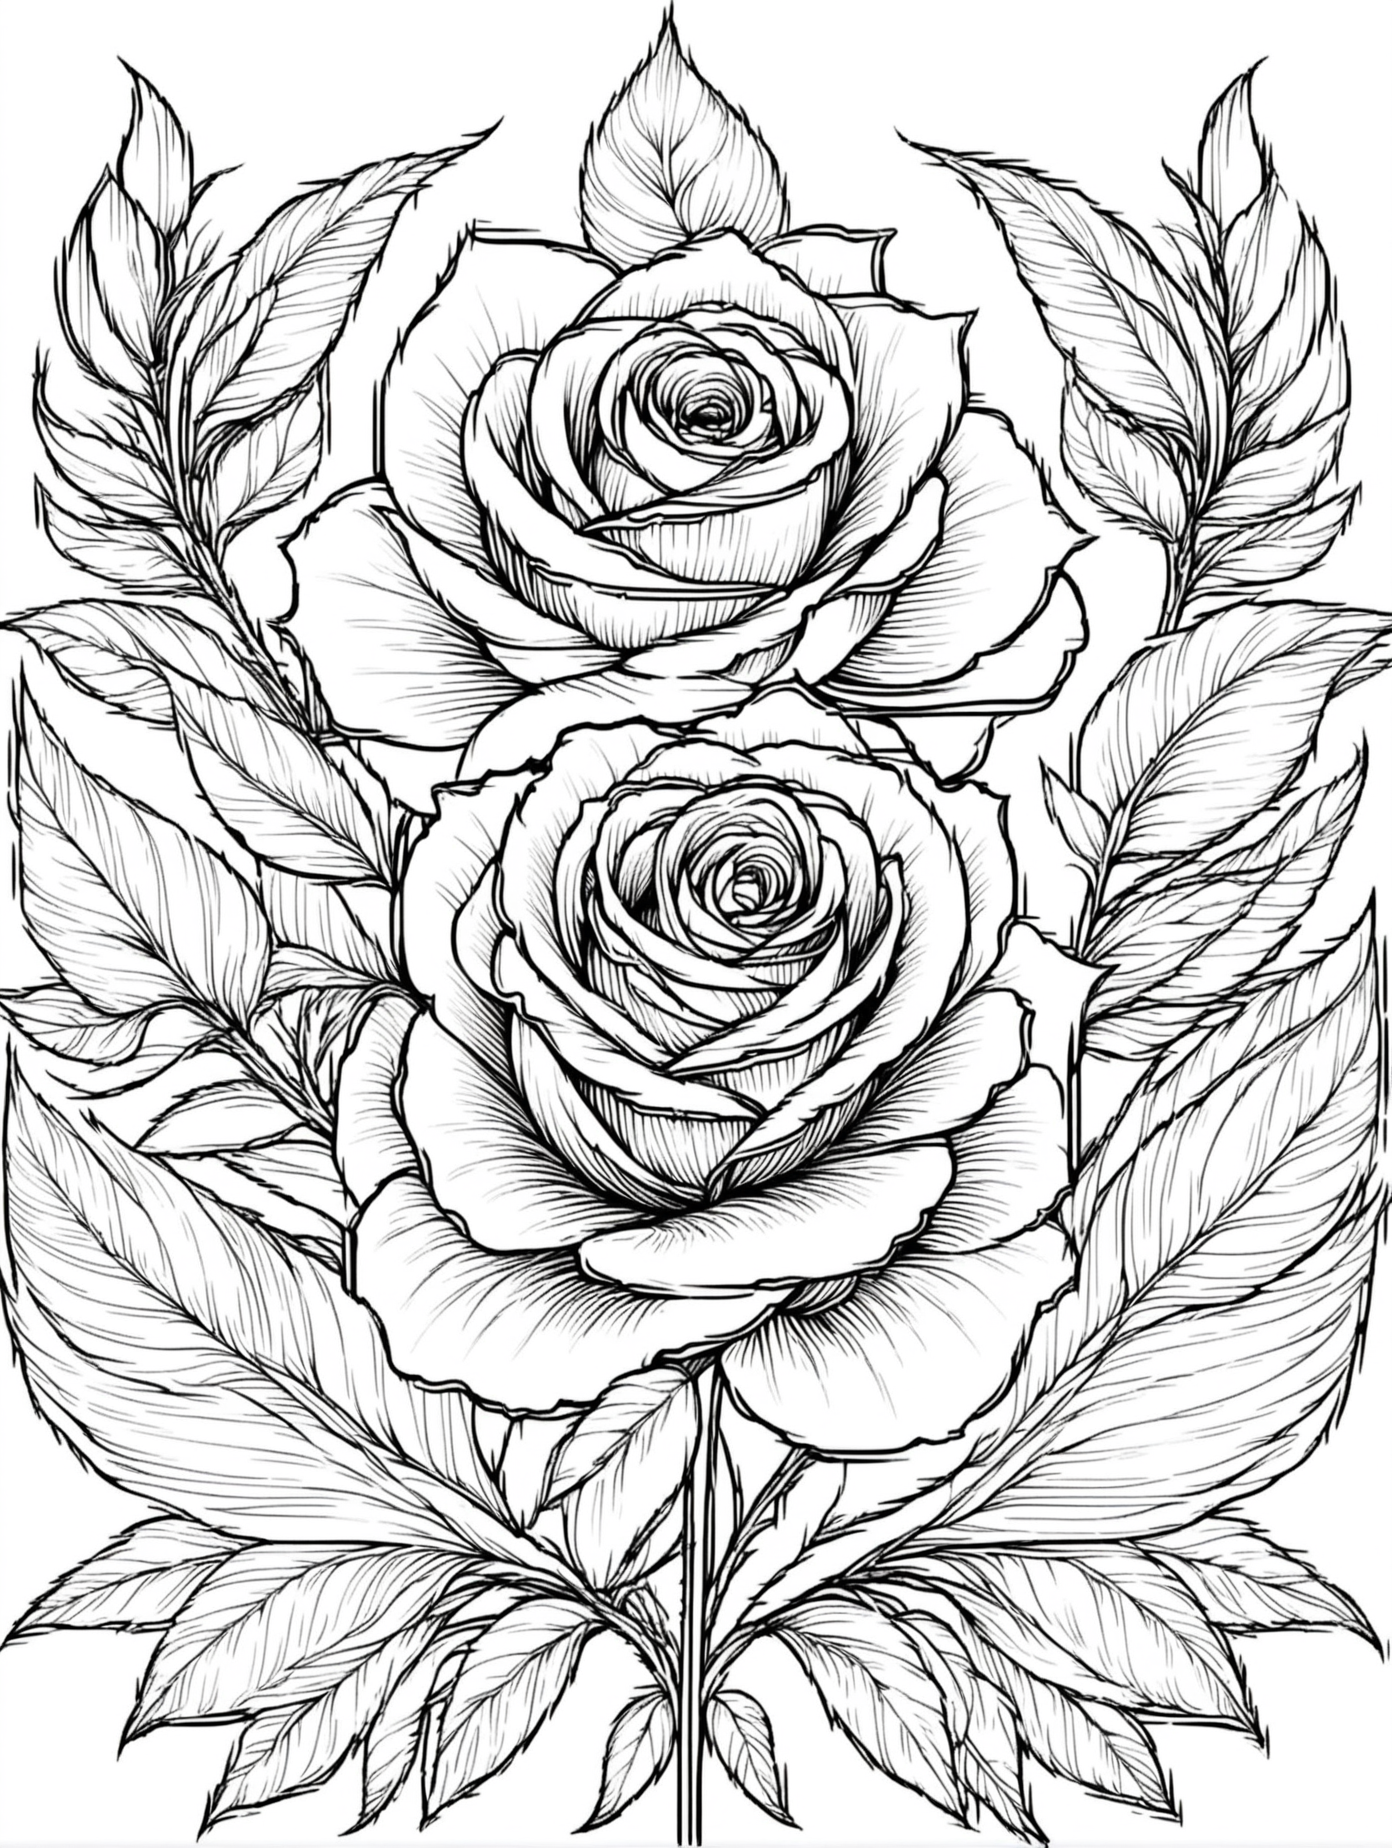 Elegant Black and White Roses Fantasy Floral Design for Coloring Pages